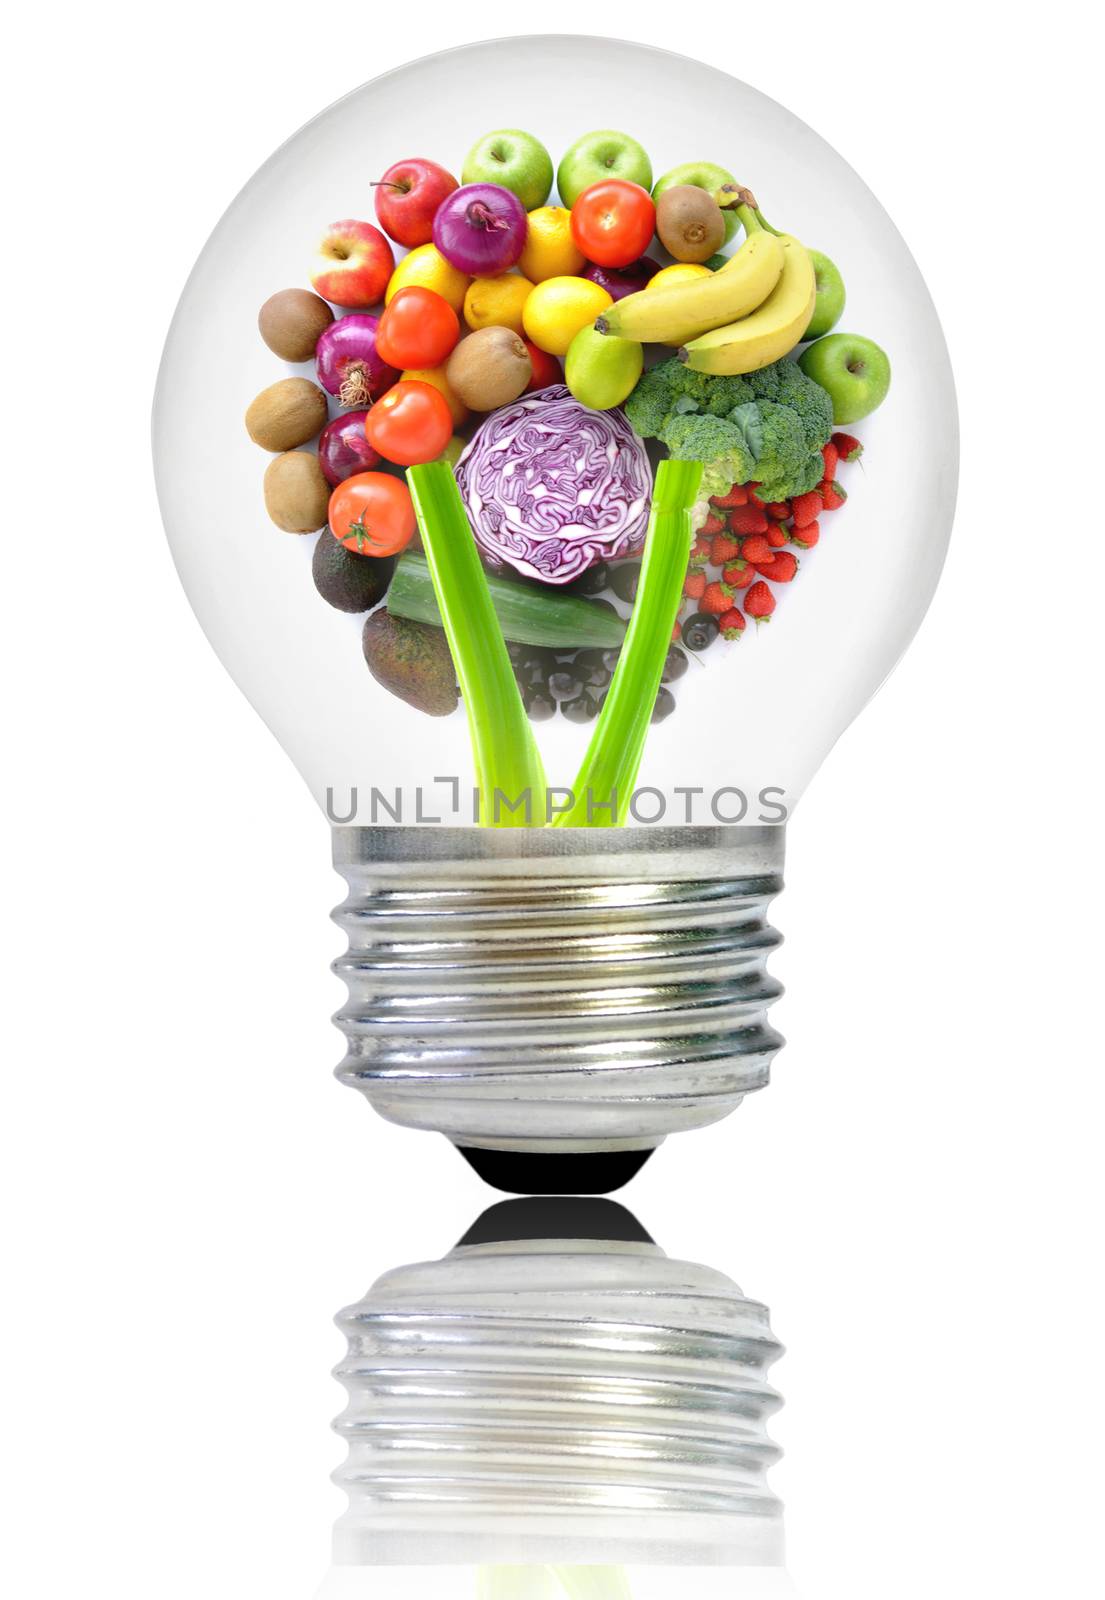 Healthy food ideas  by unikpix